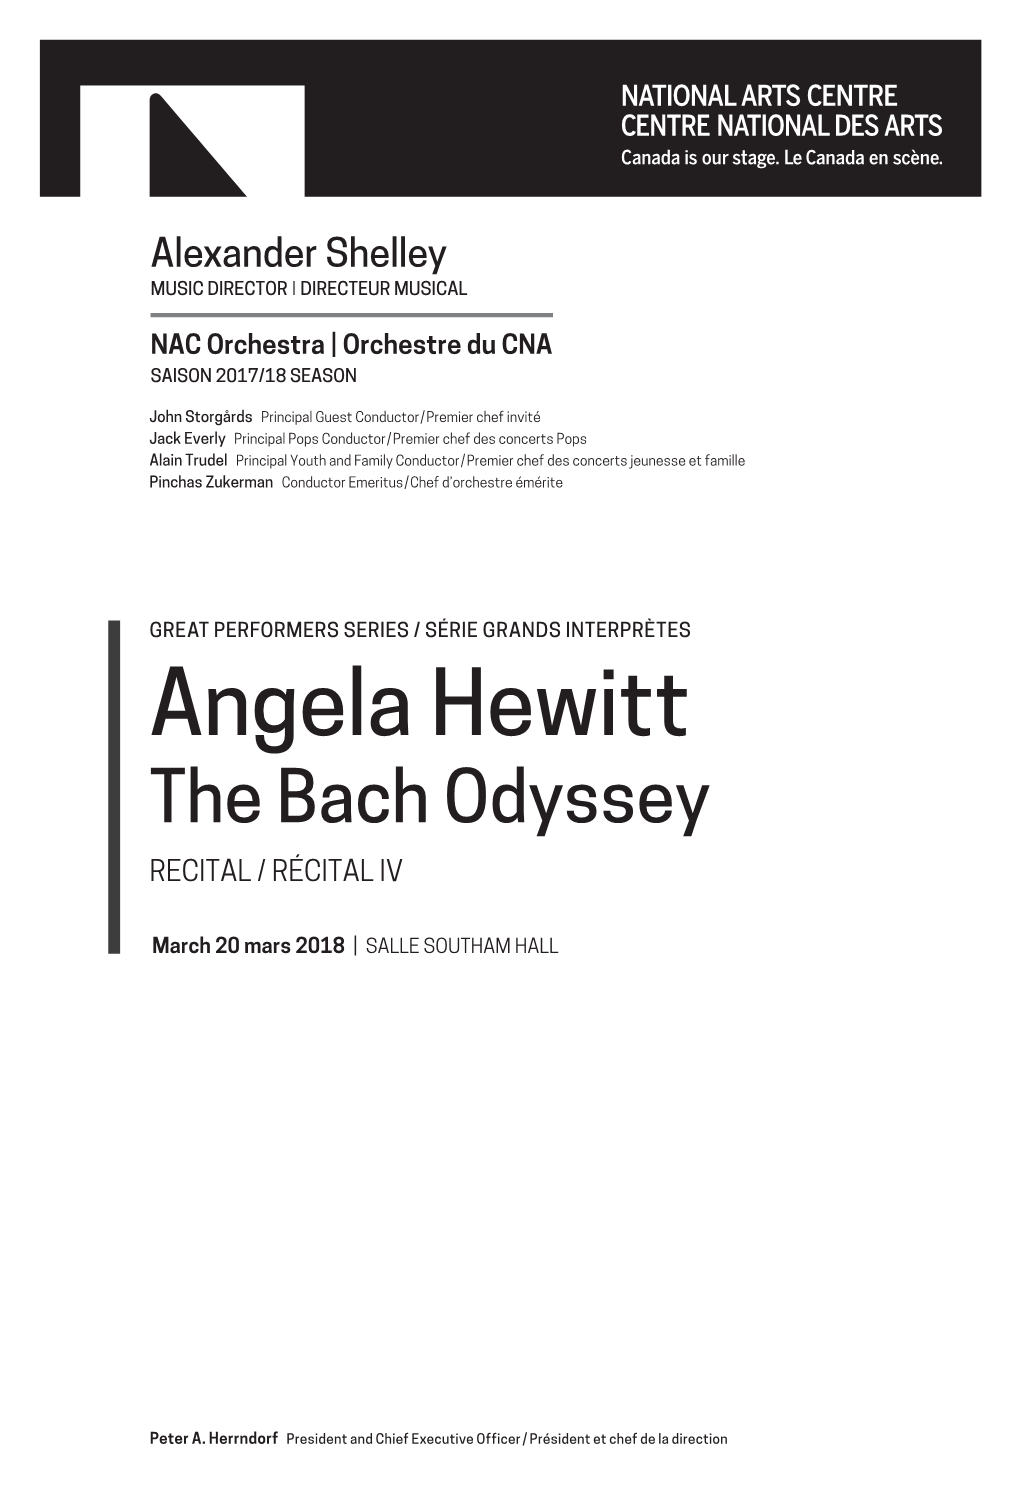 Angela Hewitt the Bach Odyssey RECITAL / RÉCITAL IV